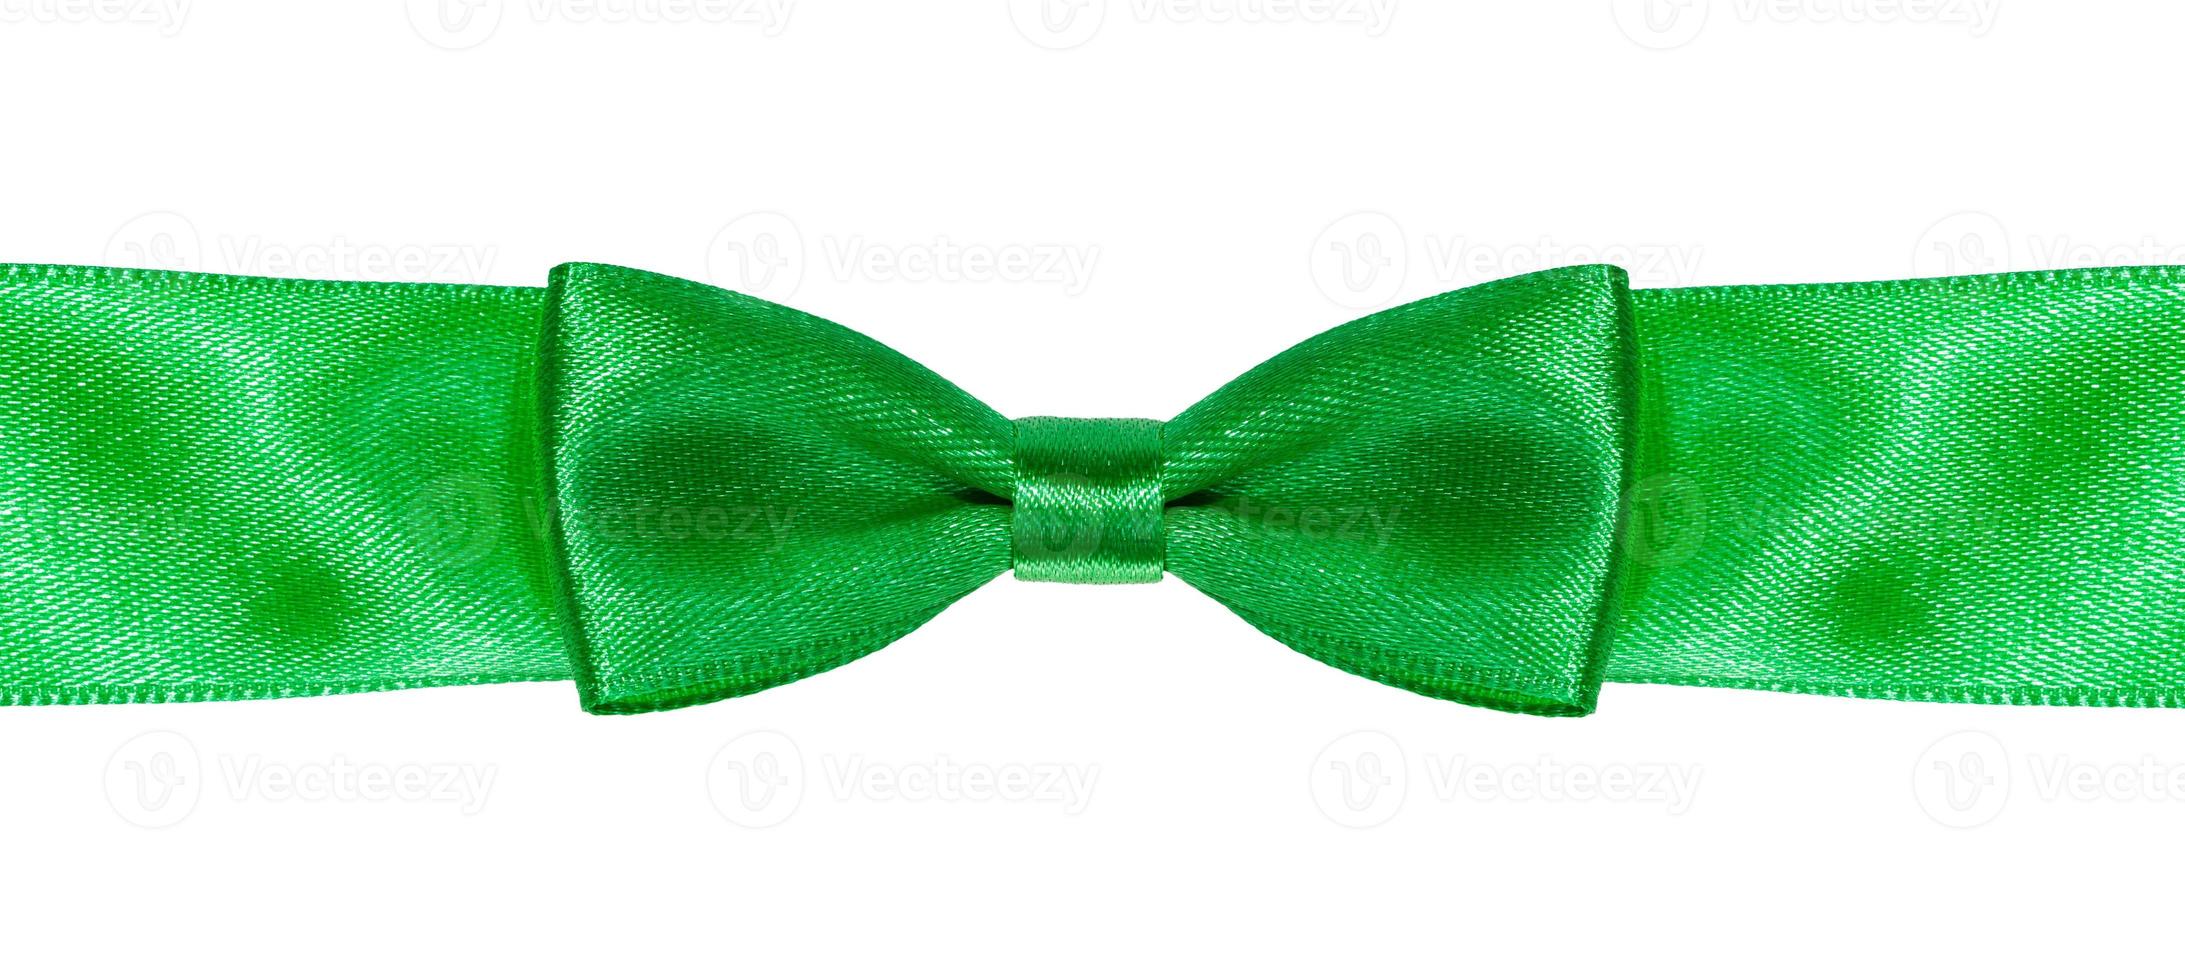 symmetric bow knot on green satin ribbon close up photo